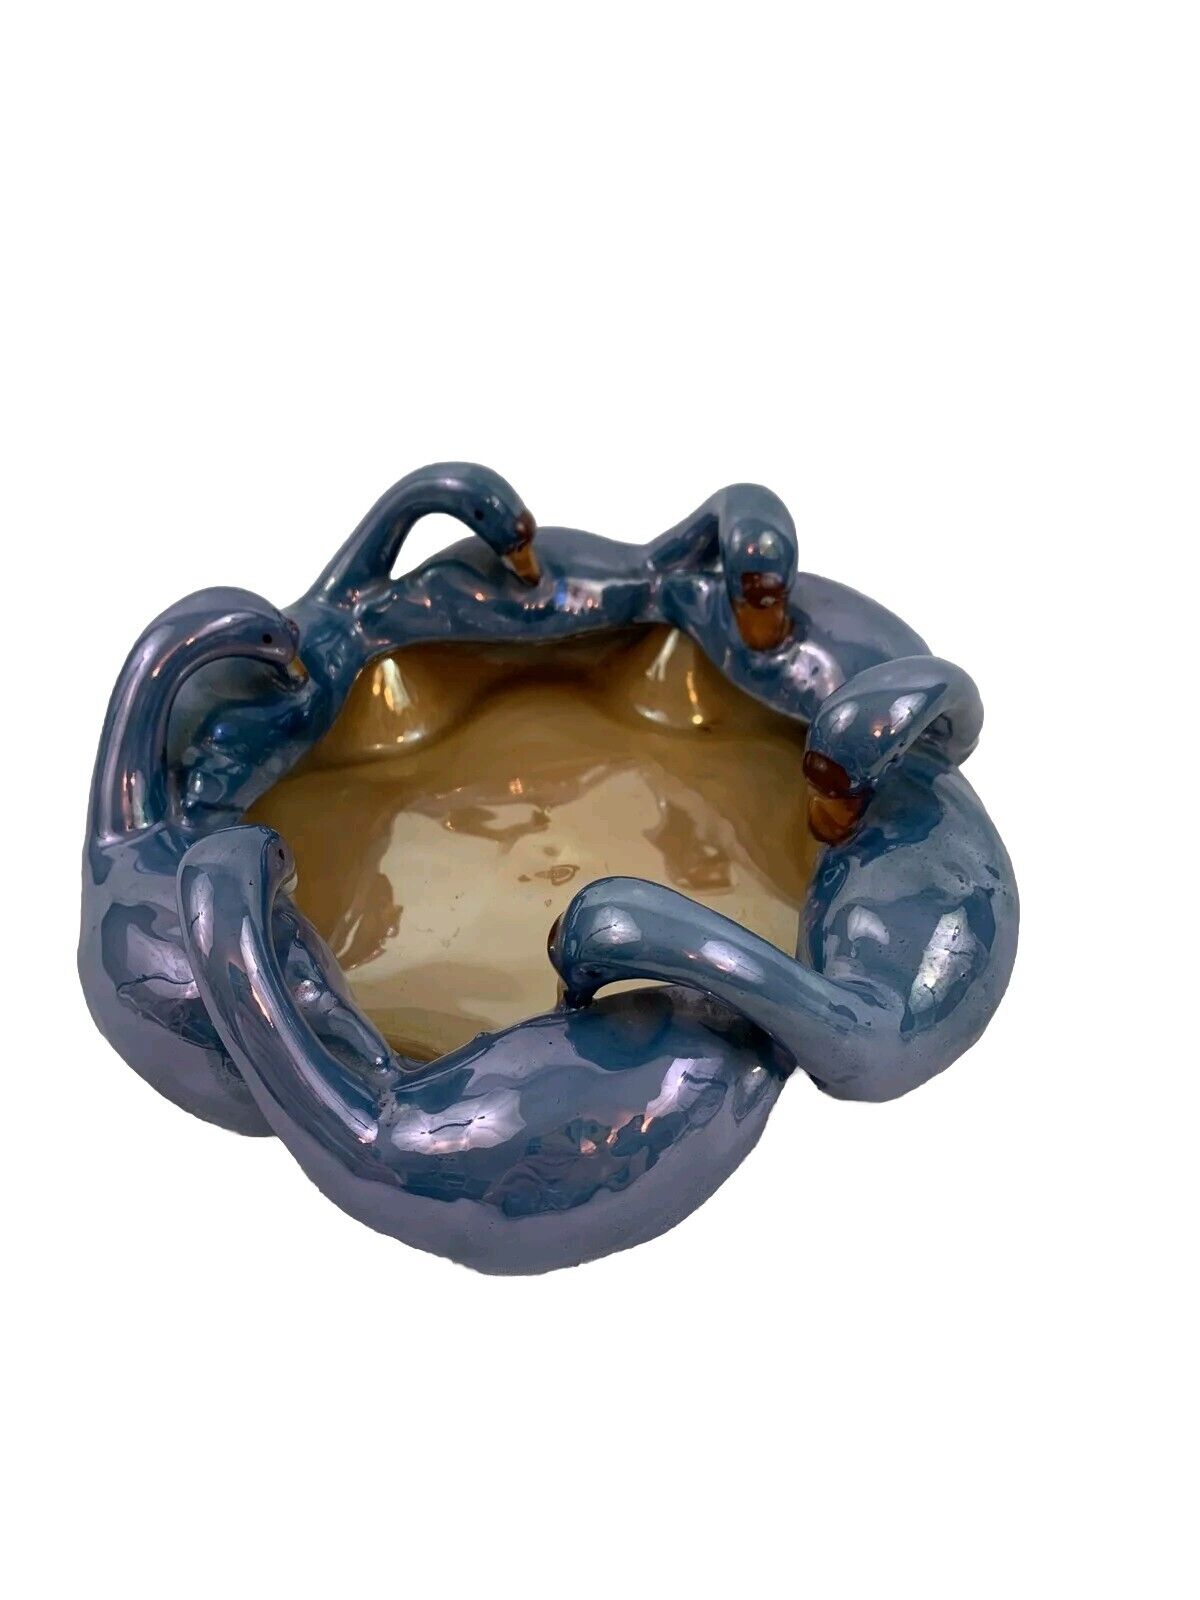 Lusterware Swan Bowl Ashtray Made in Japan Swans Home Decor Vintage Porcelain